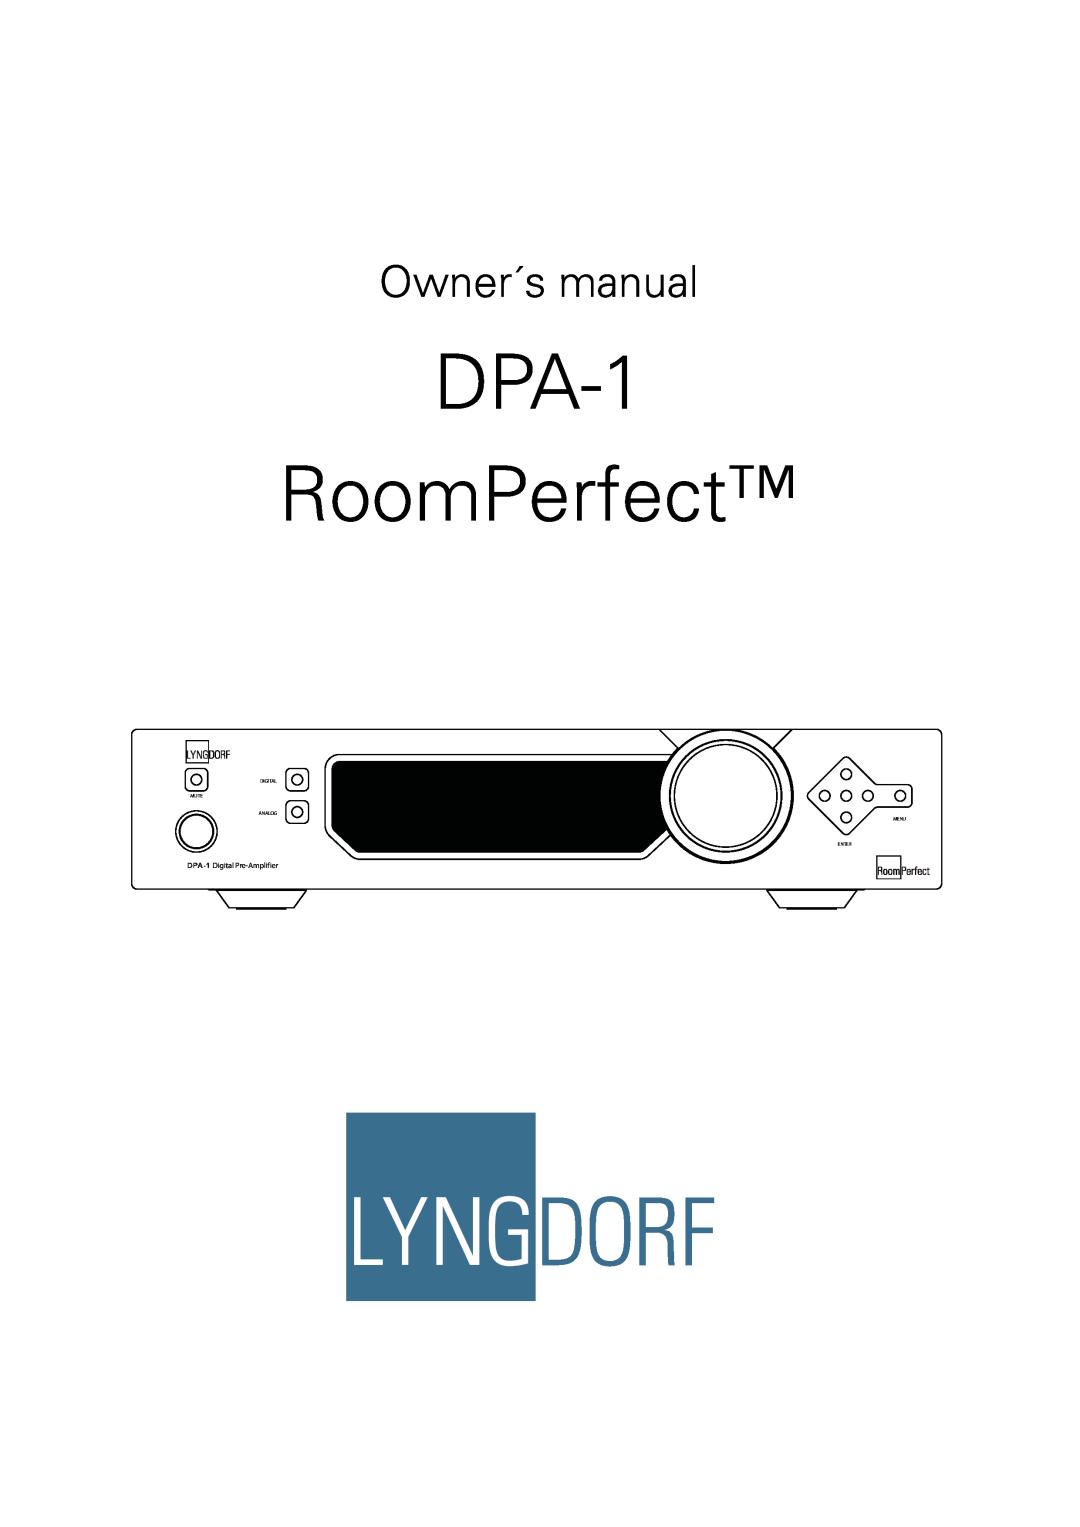 Lyngdorf Audio owner manual DPA-1 RoomPerfect, Owner´s manual, DPA-1 Digital Pre-Amplifier, Digital Mute Analog 